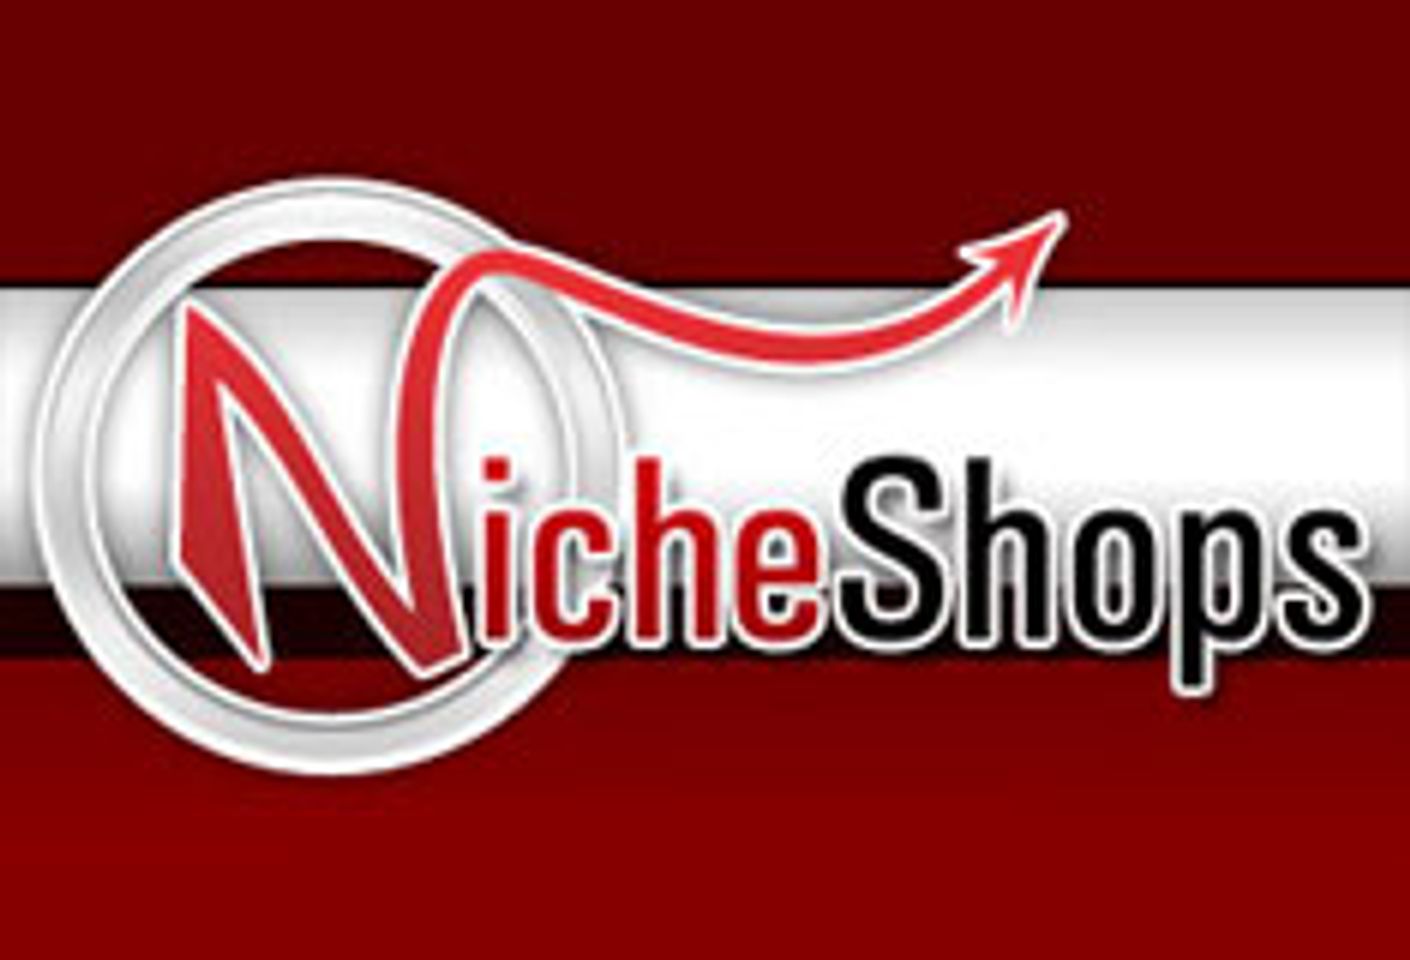 NicheShops Launches New Novelty Program